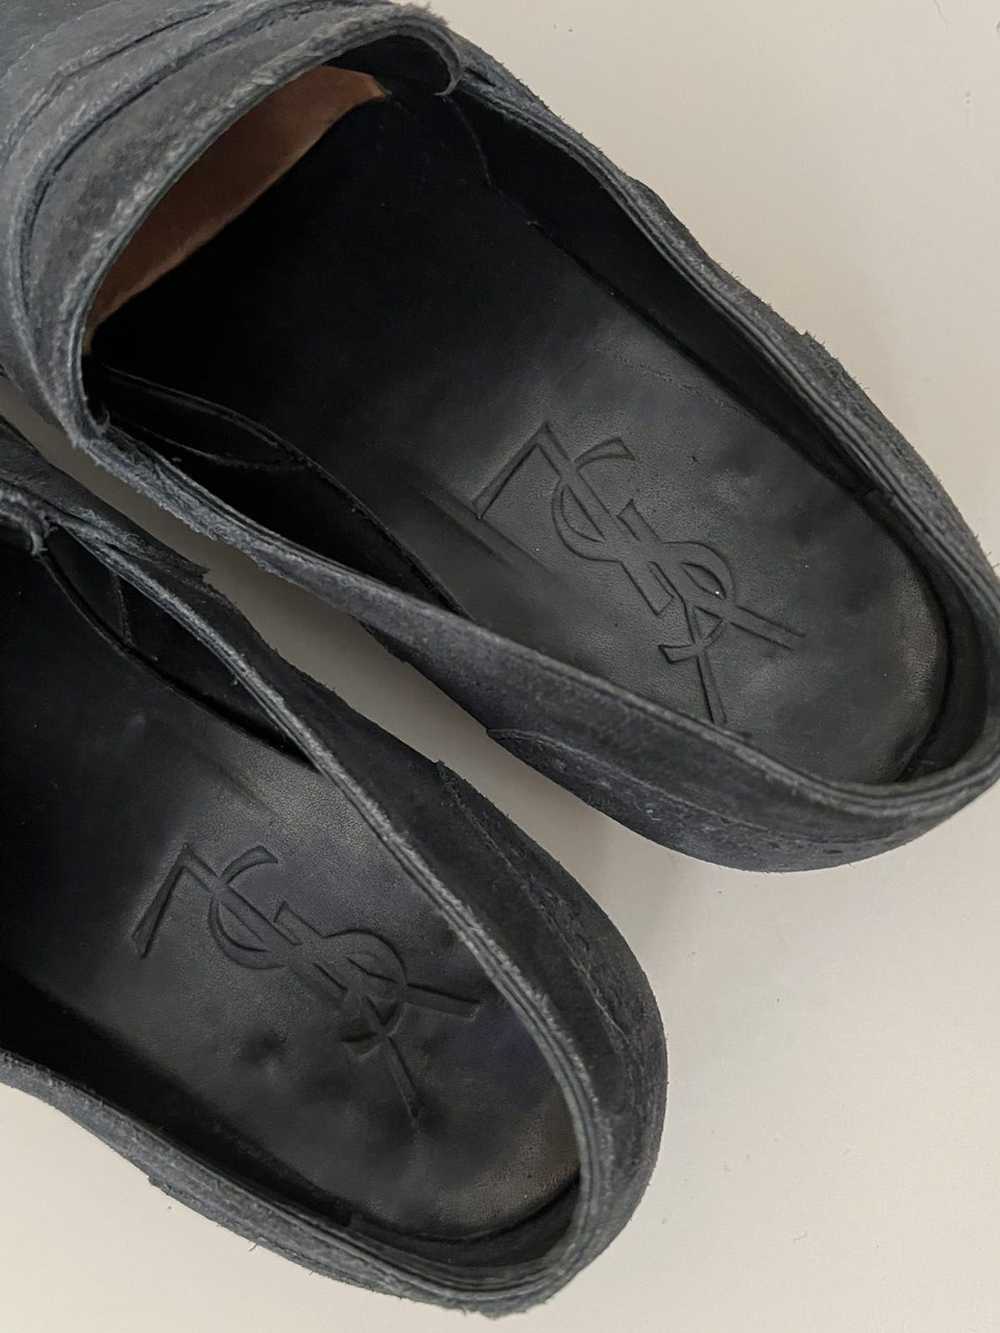 Yves Saint Laurent YSL suede shoes - image 5